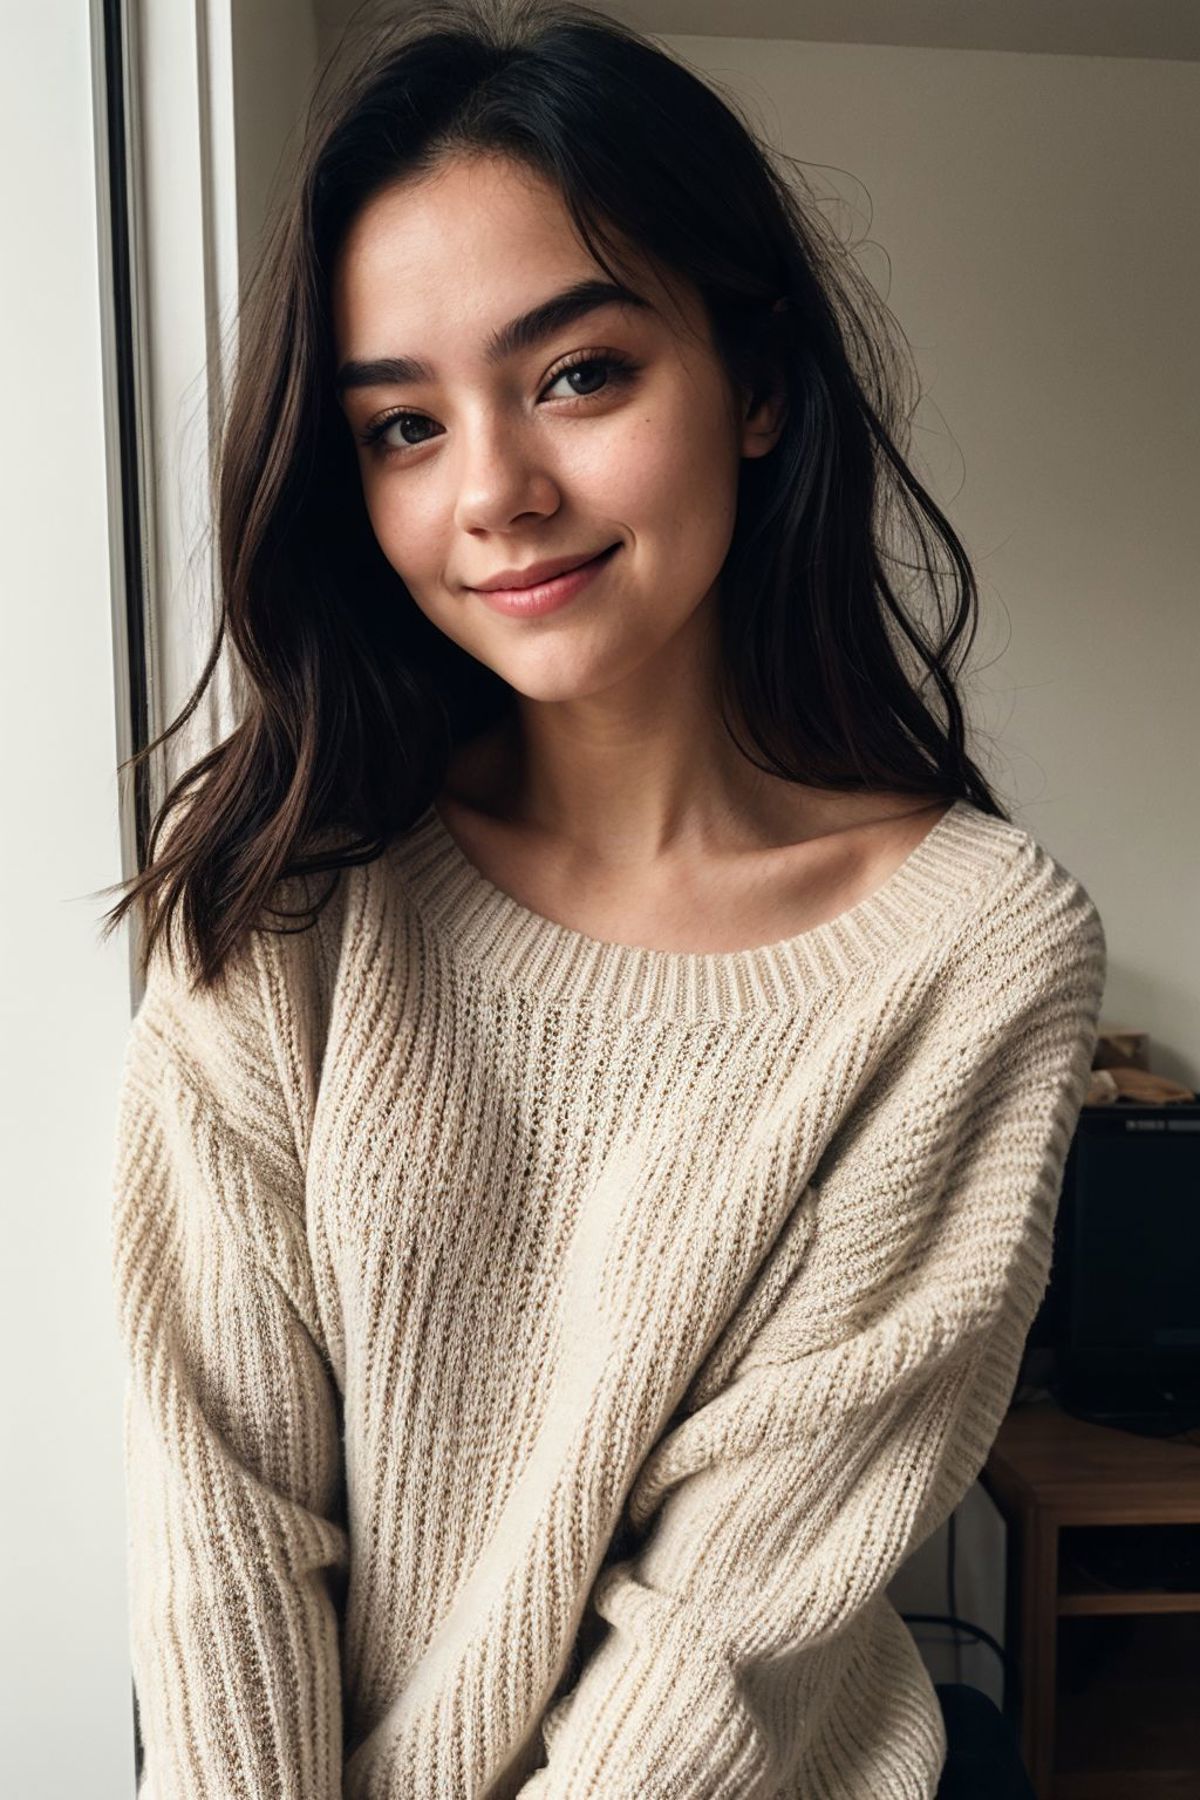 A smiling woman wearing a tan sweater.